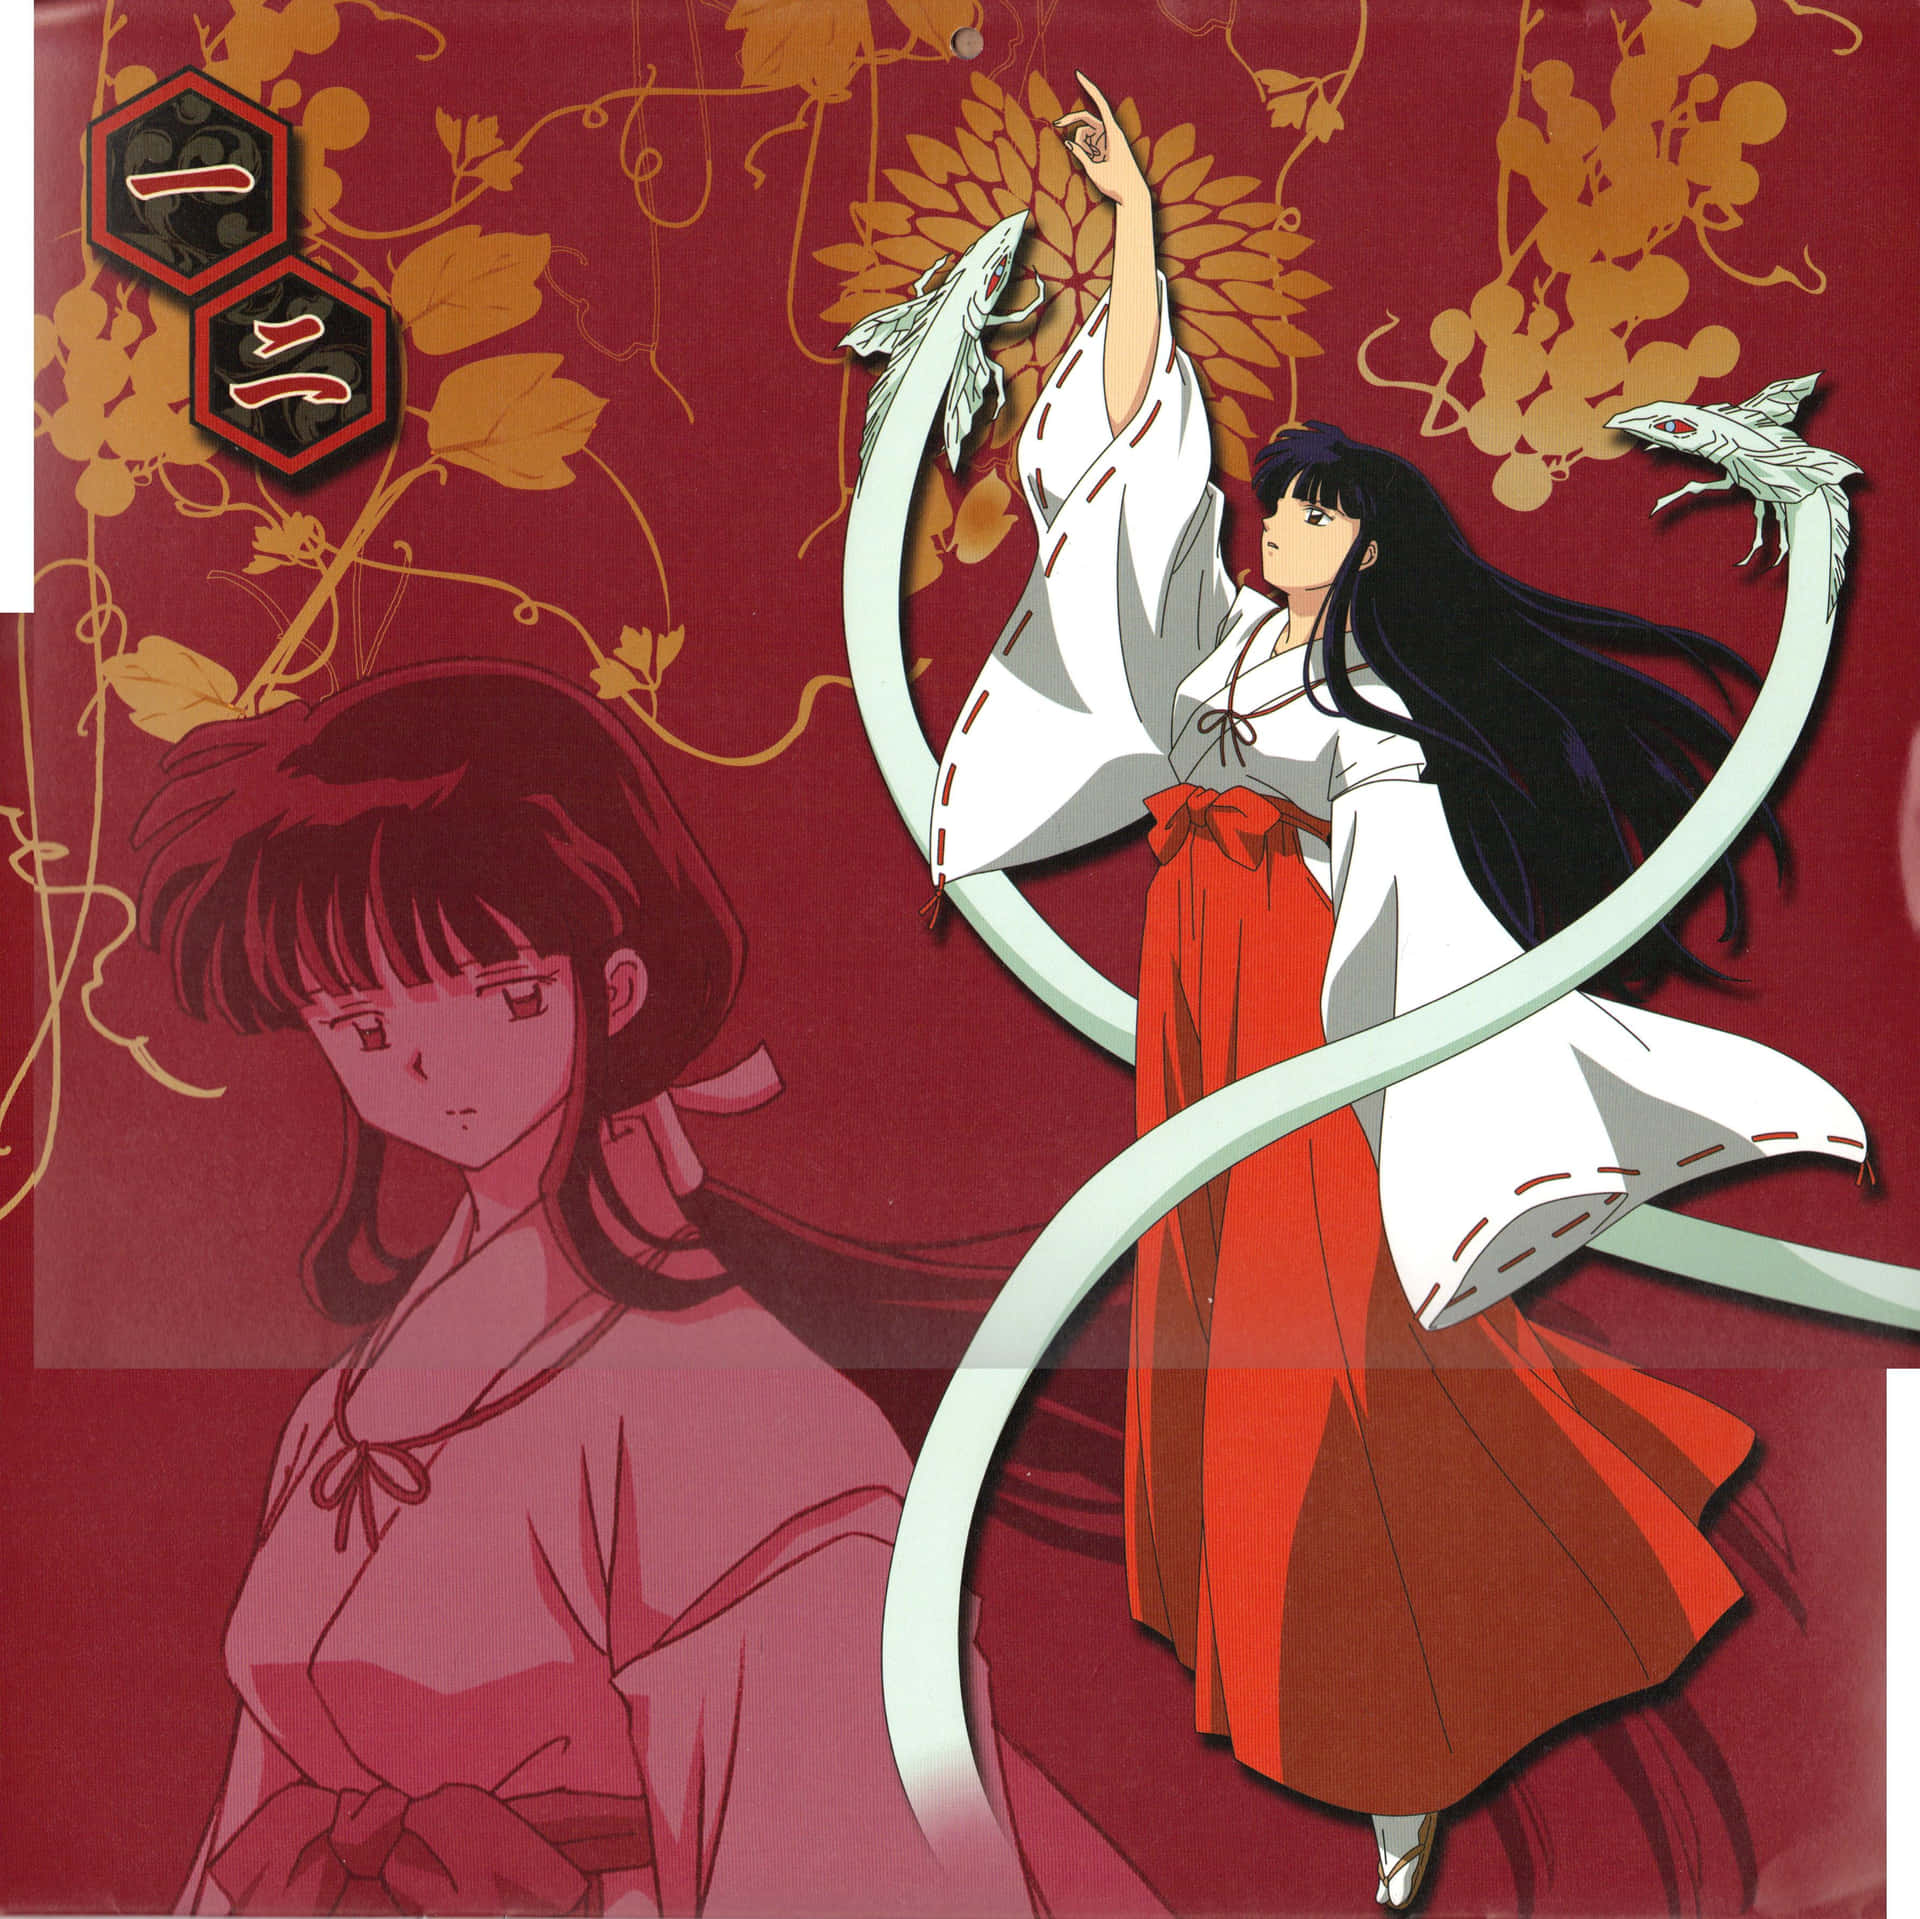 Kikyo, the beautiful priestess from InuYasha anime series, holding a bow and arrow. Wallpaper